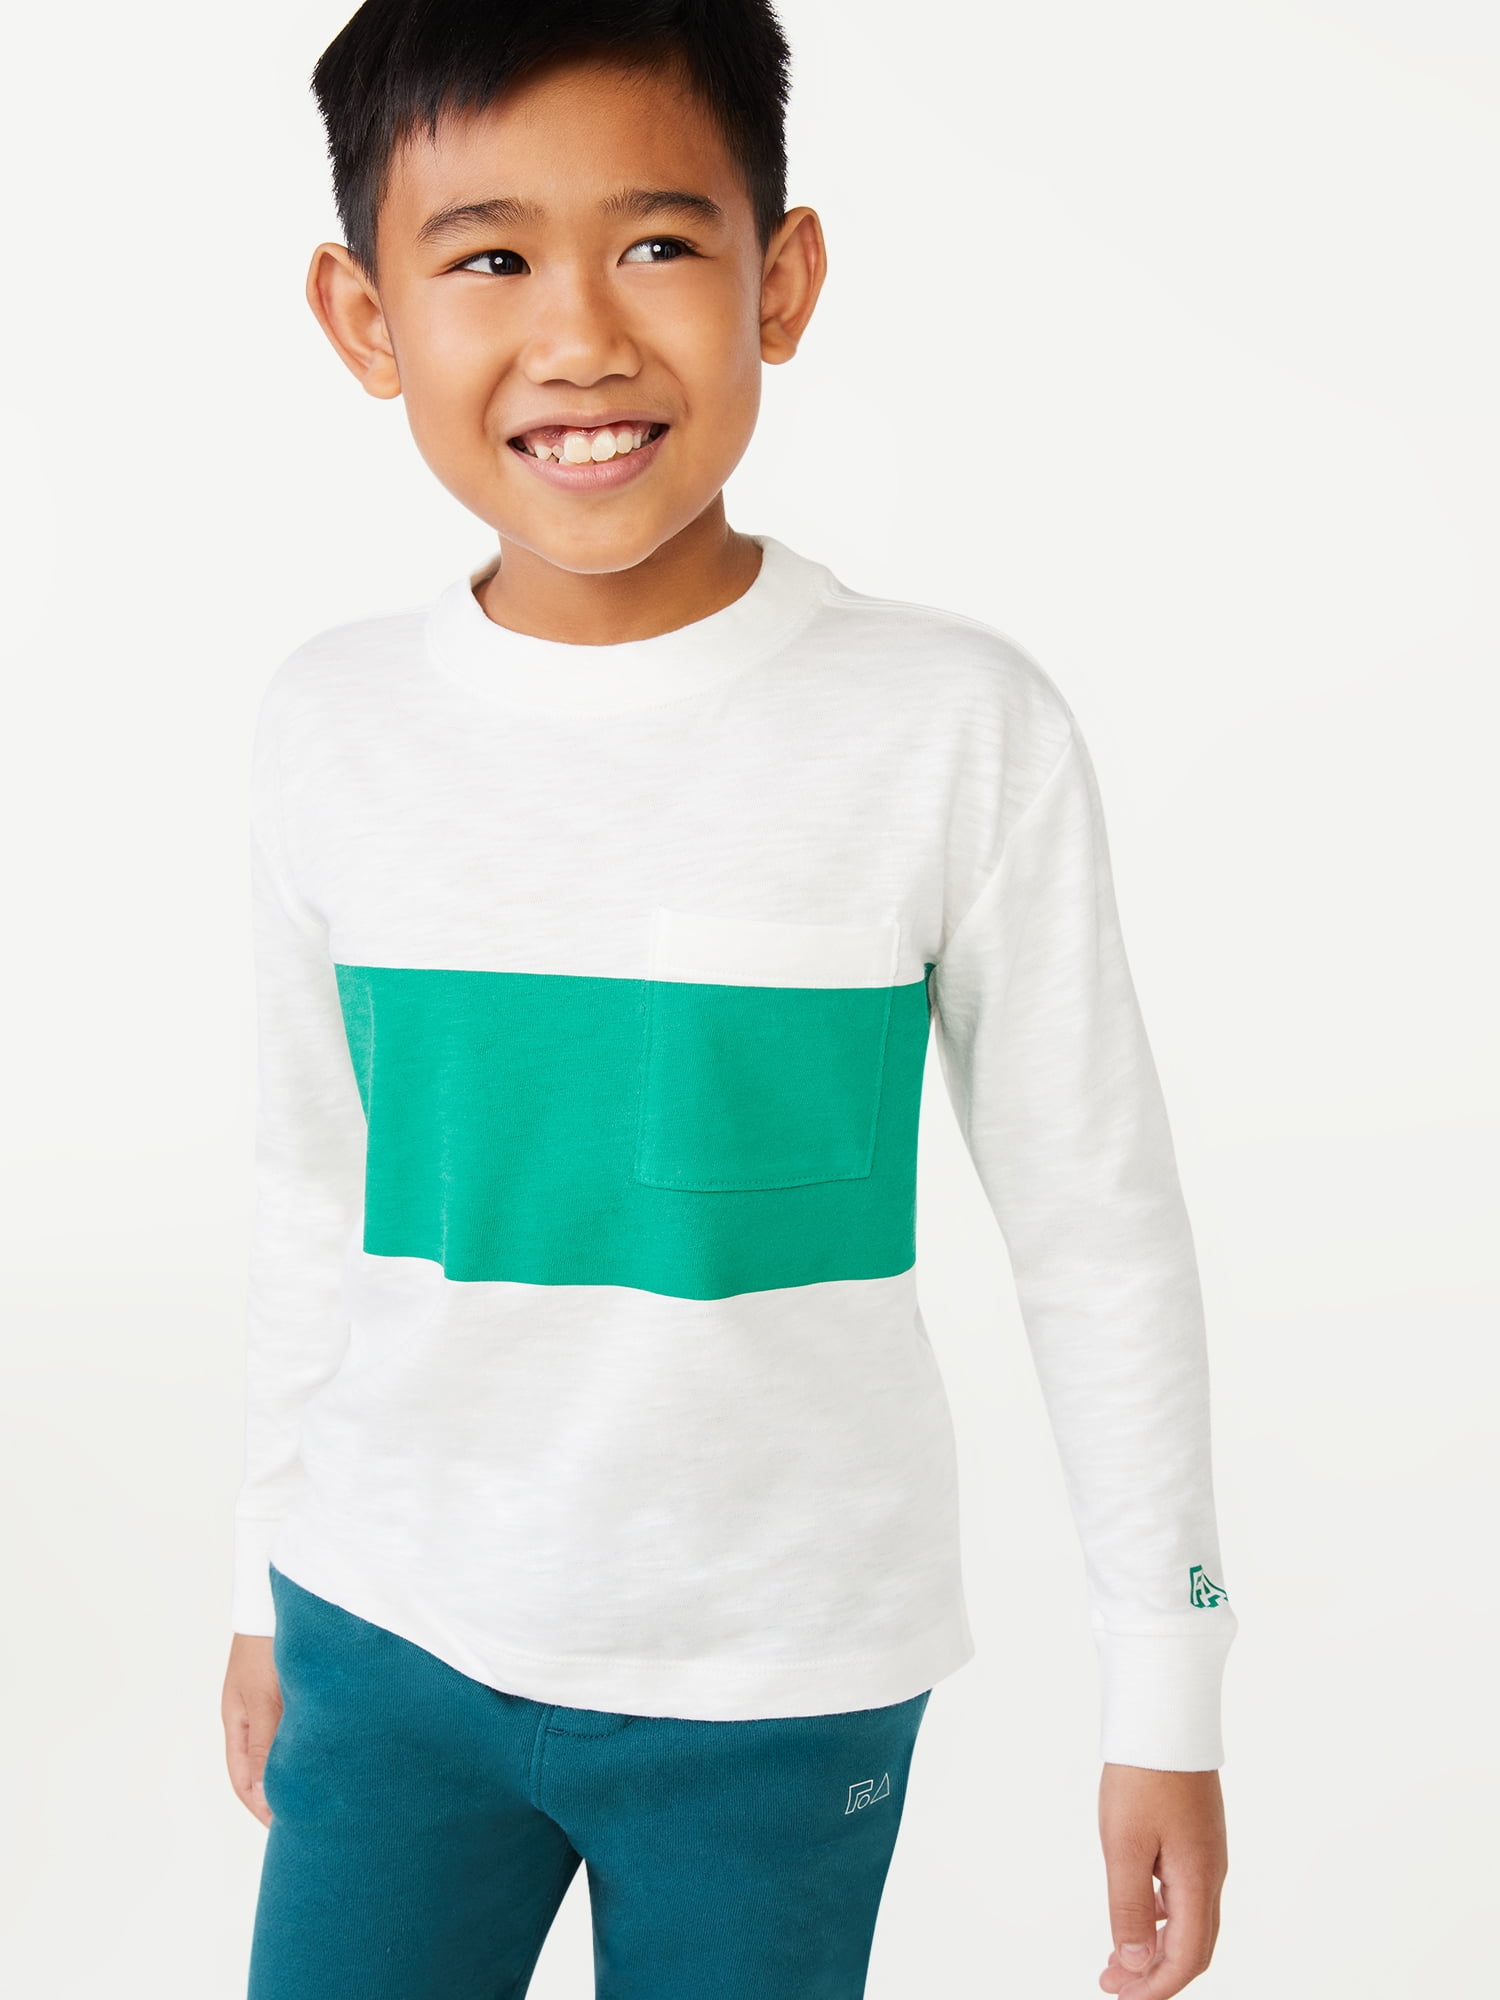 Boys Kids Top T-Shirt Grey Long Sleeves 6-10 years Brand New 